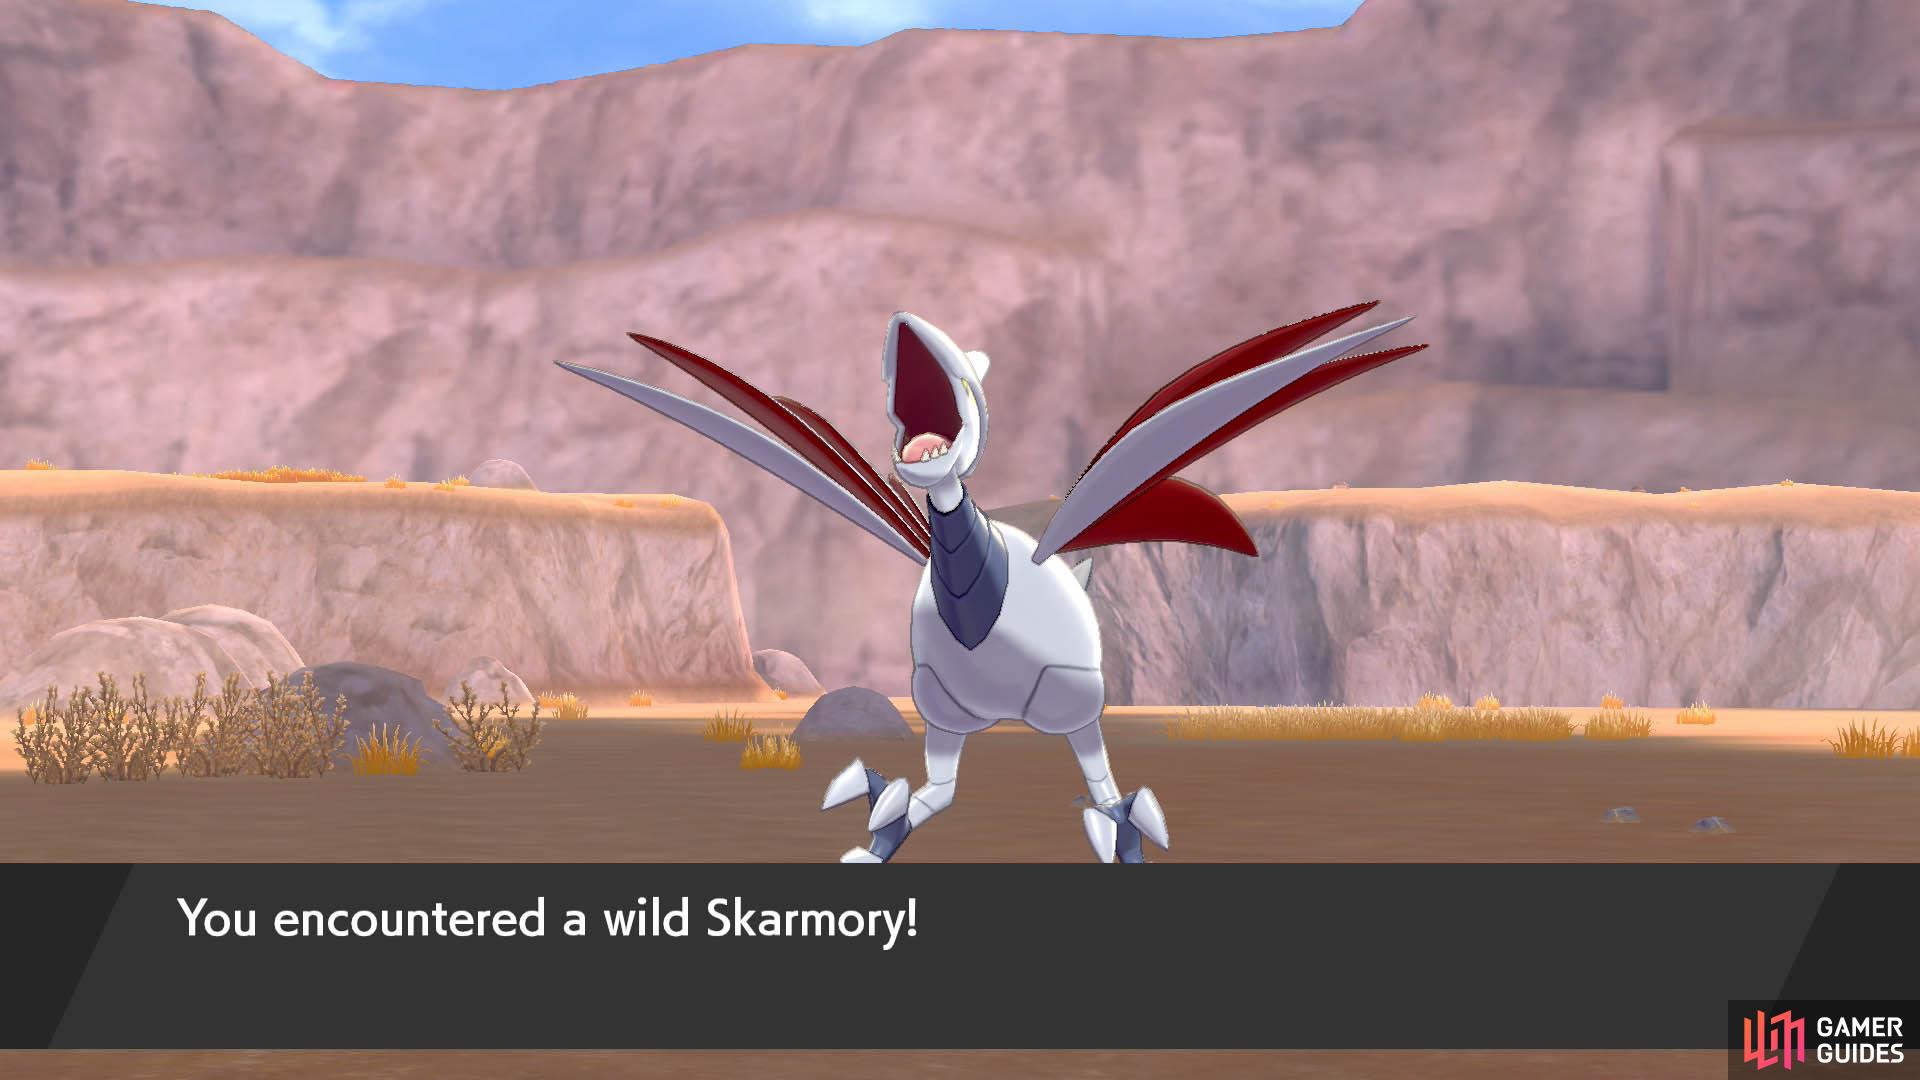 Pokémon Sword & Shield DLC : Full Pokédex Complete (Isle of Armor) 